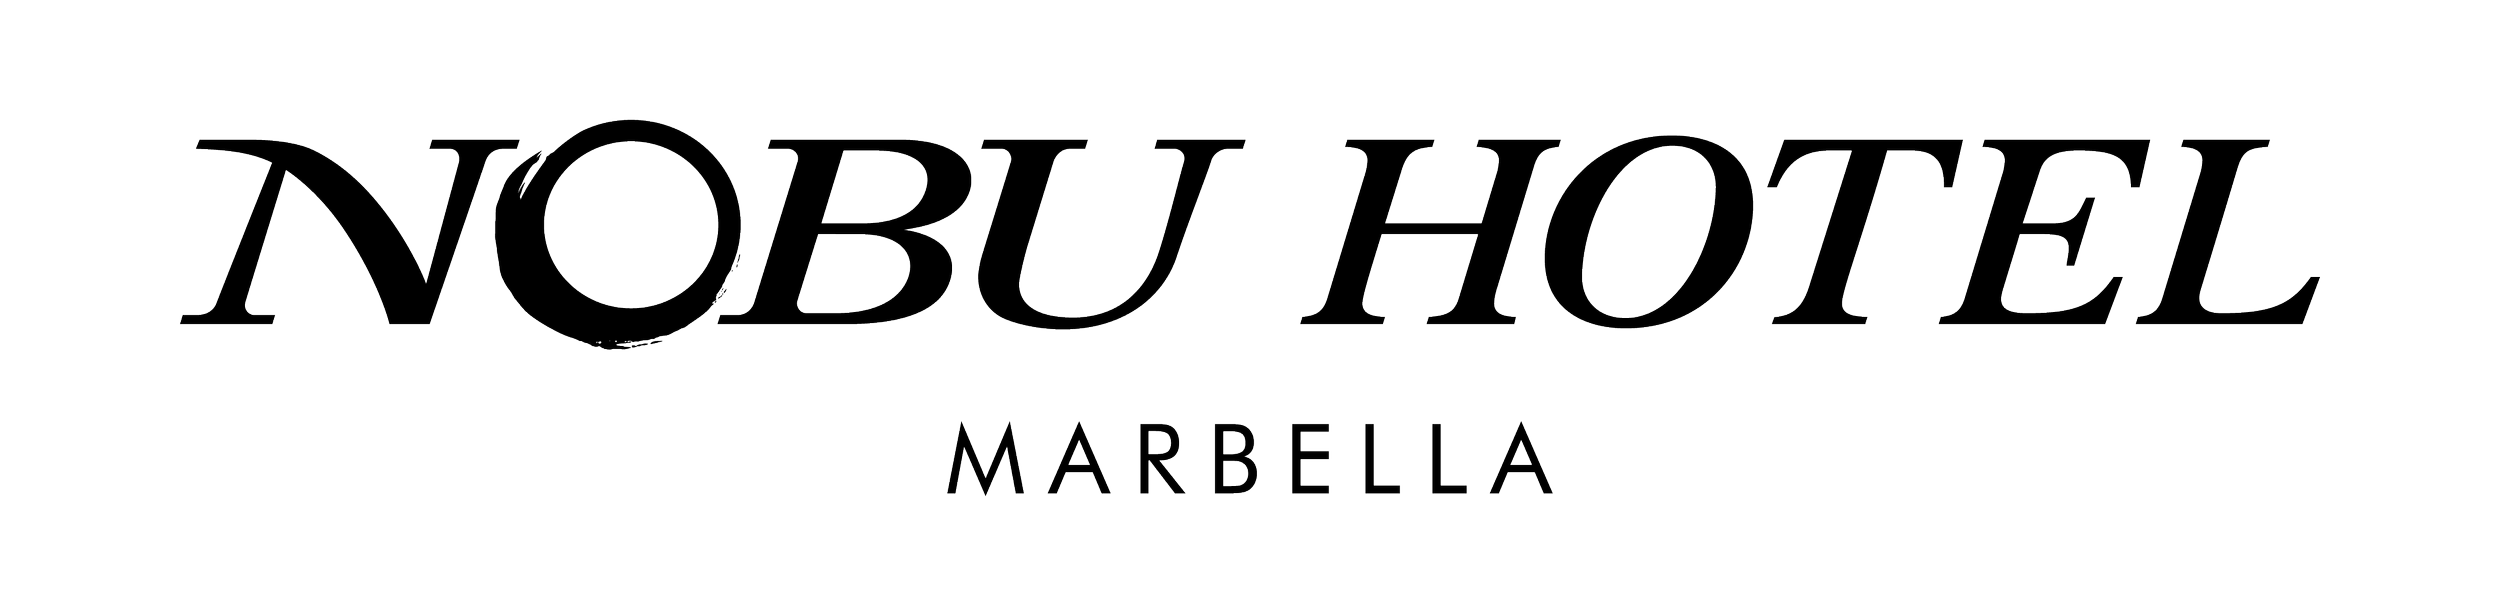 Nobu_Logo_Marbella_BlackonWhite.png